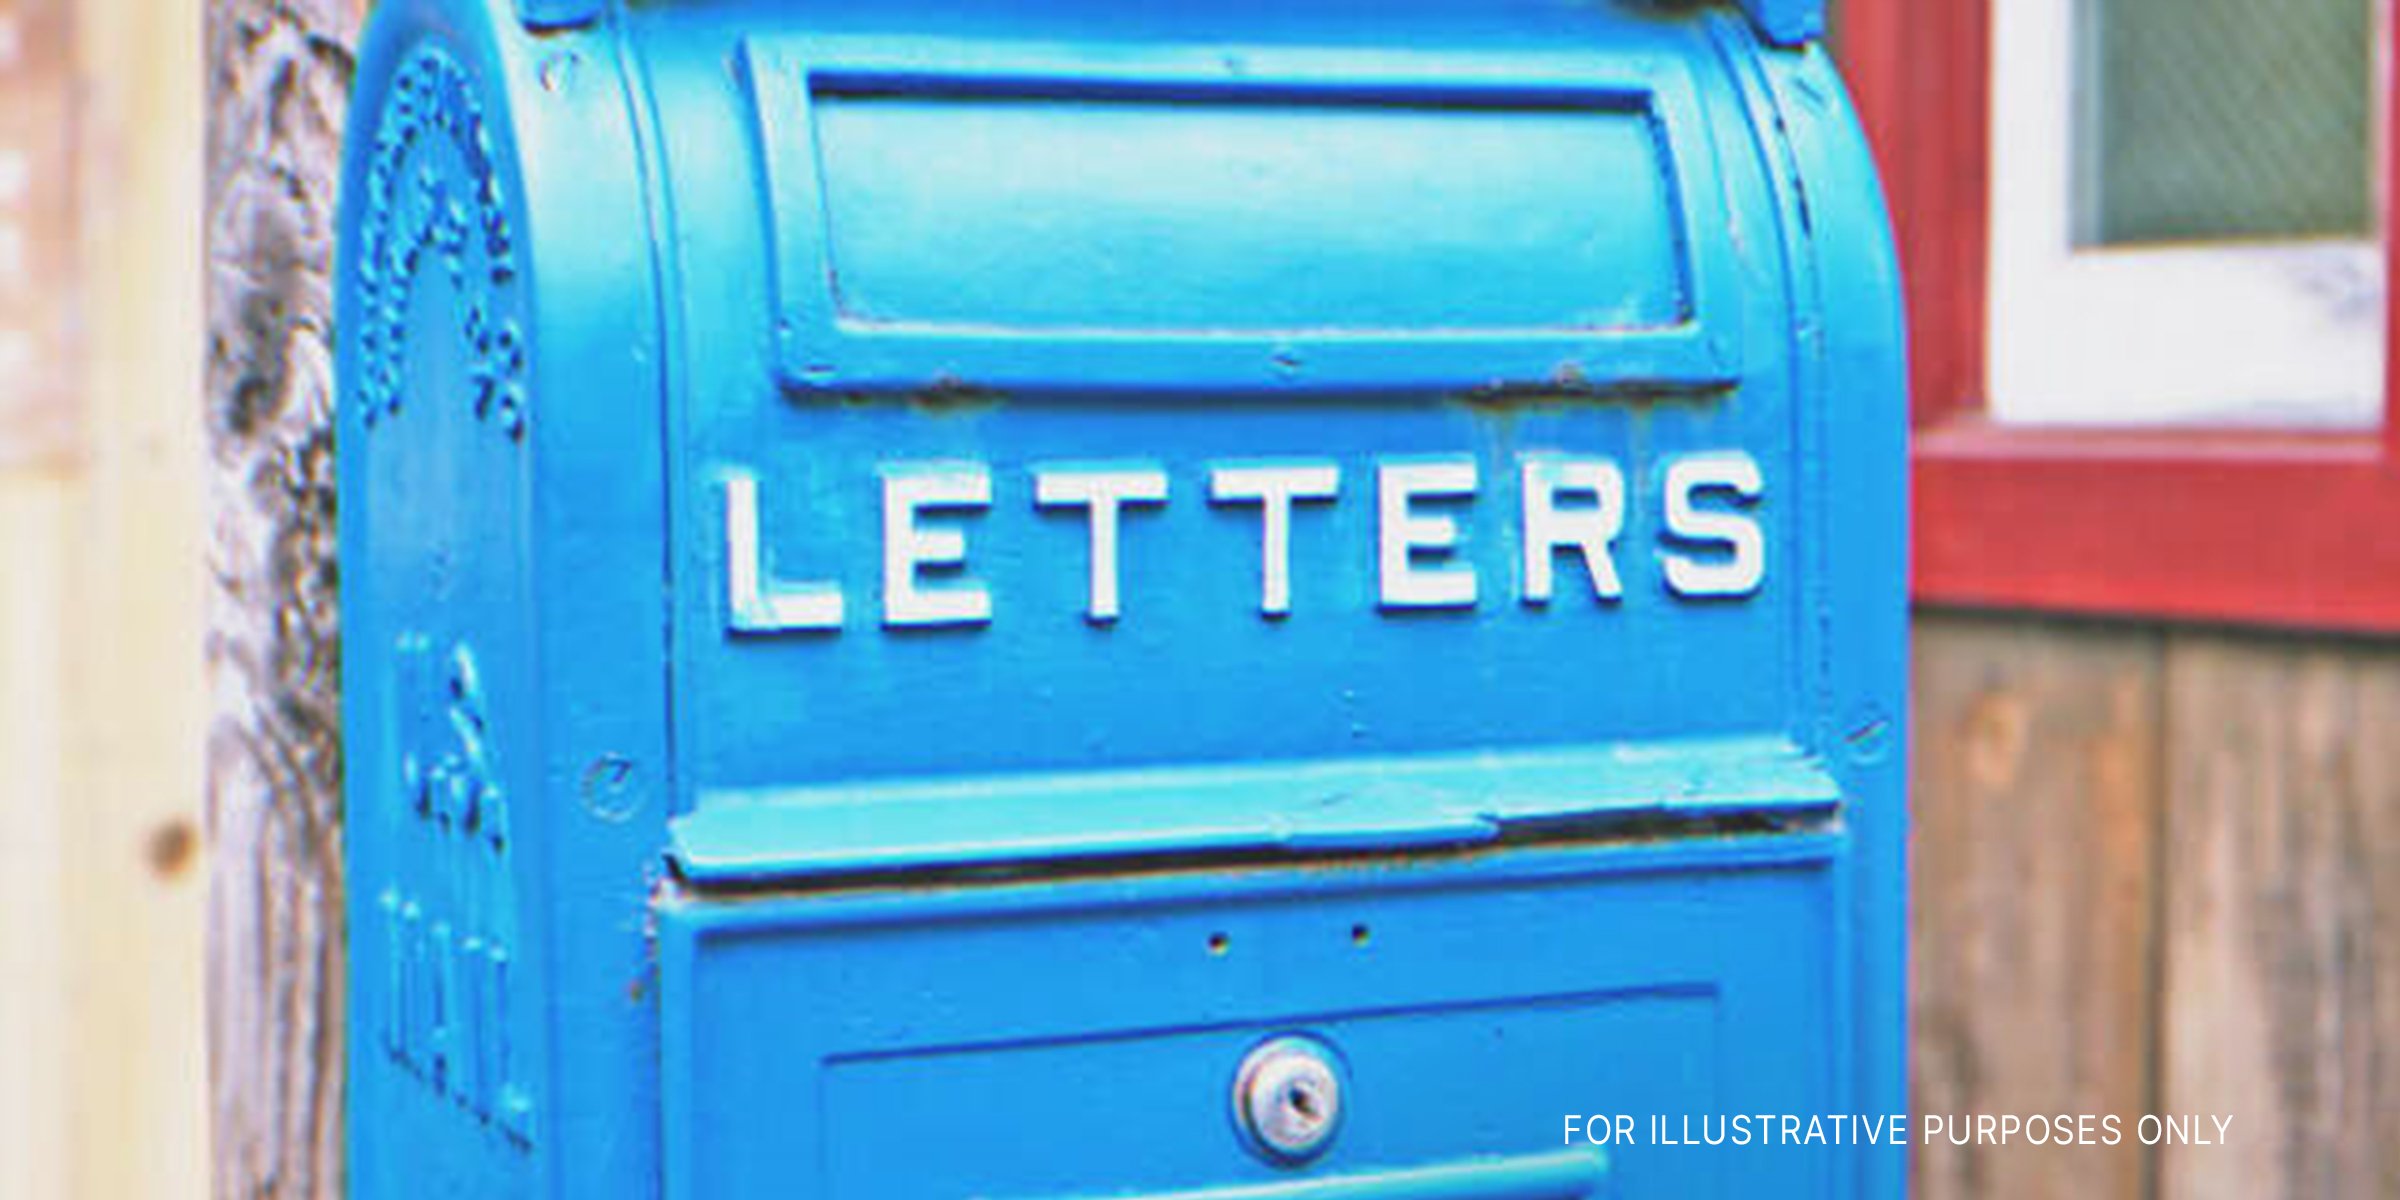 Mail box | Source: Shutterstock